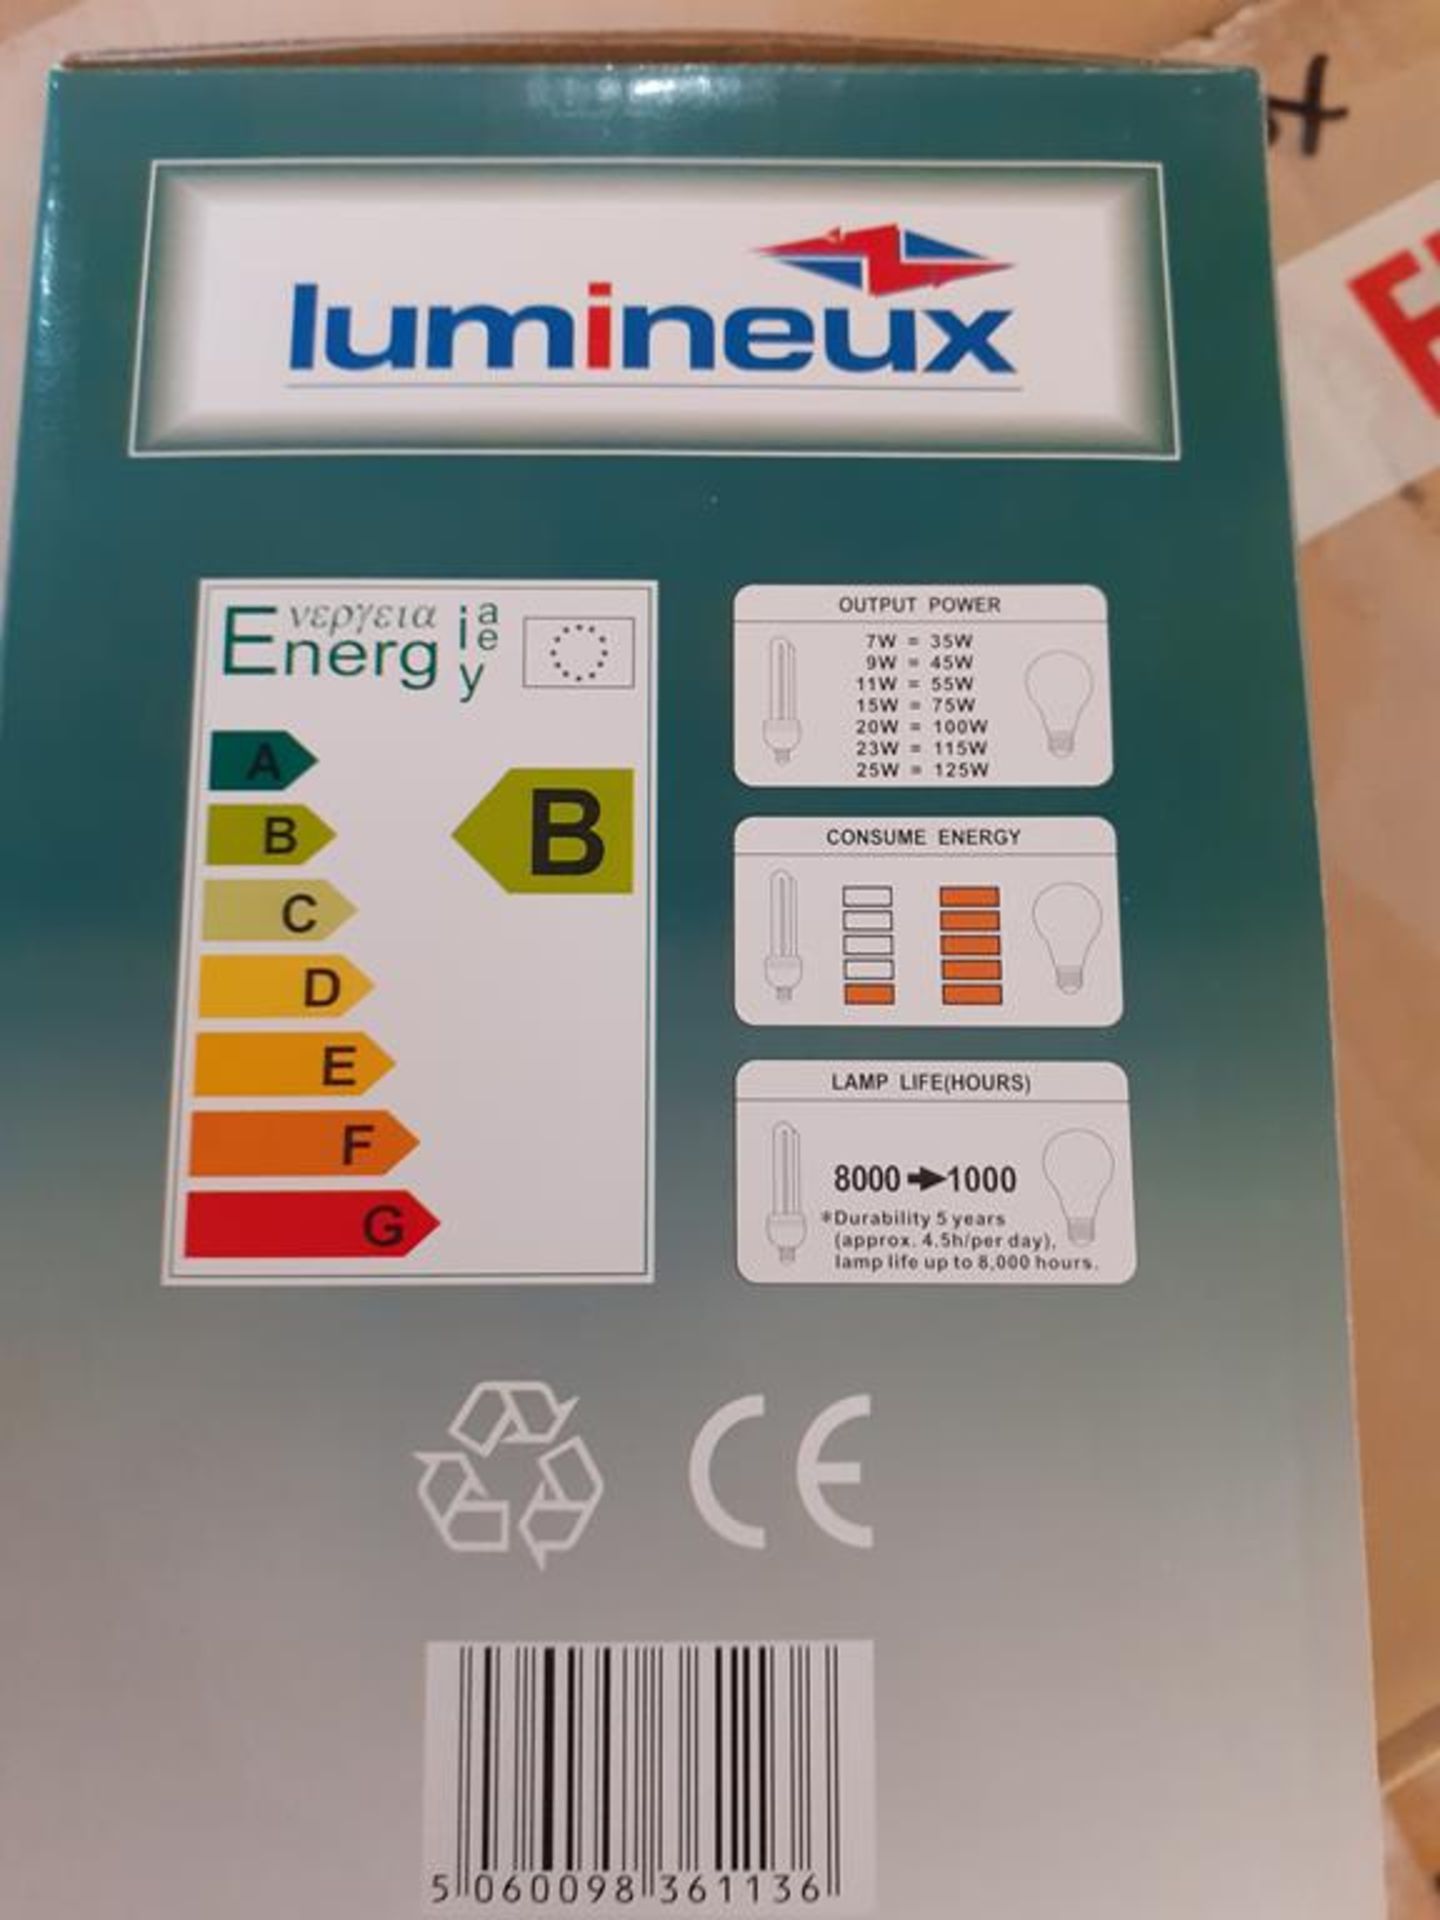 3x boxes of Lumineux Reflector 23W E27 2700K 220-240V Engery Saving Bulbs (20pcs per box) - Image 3 of 3